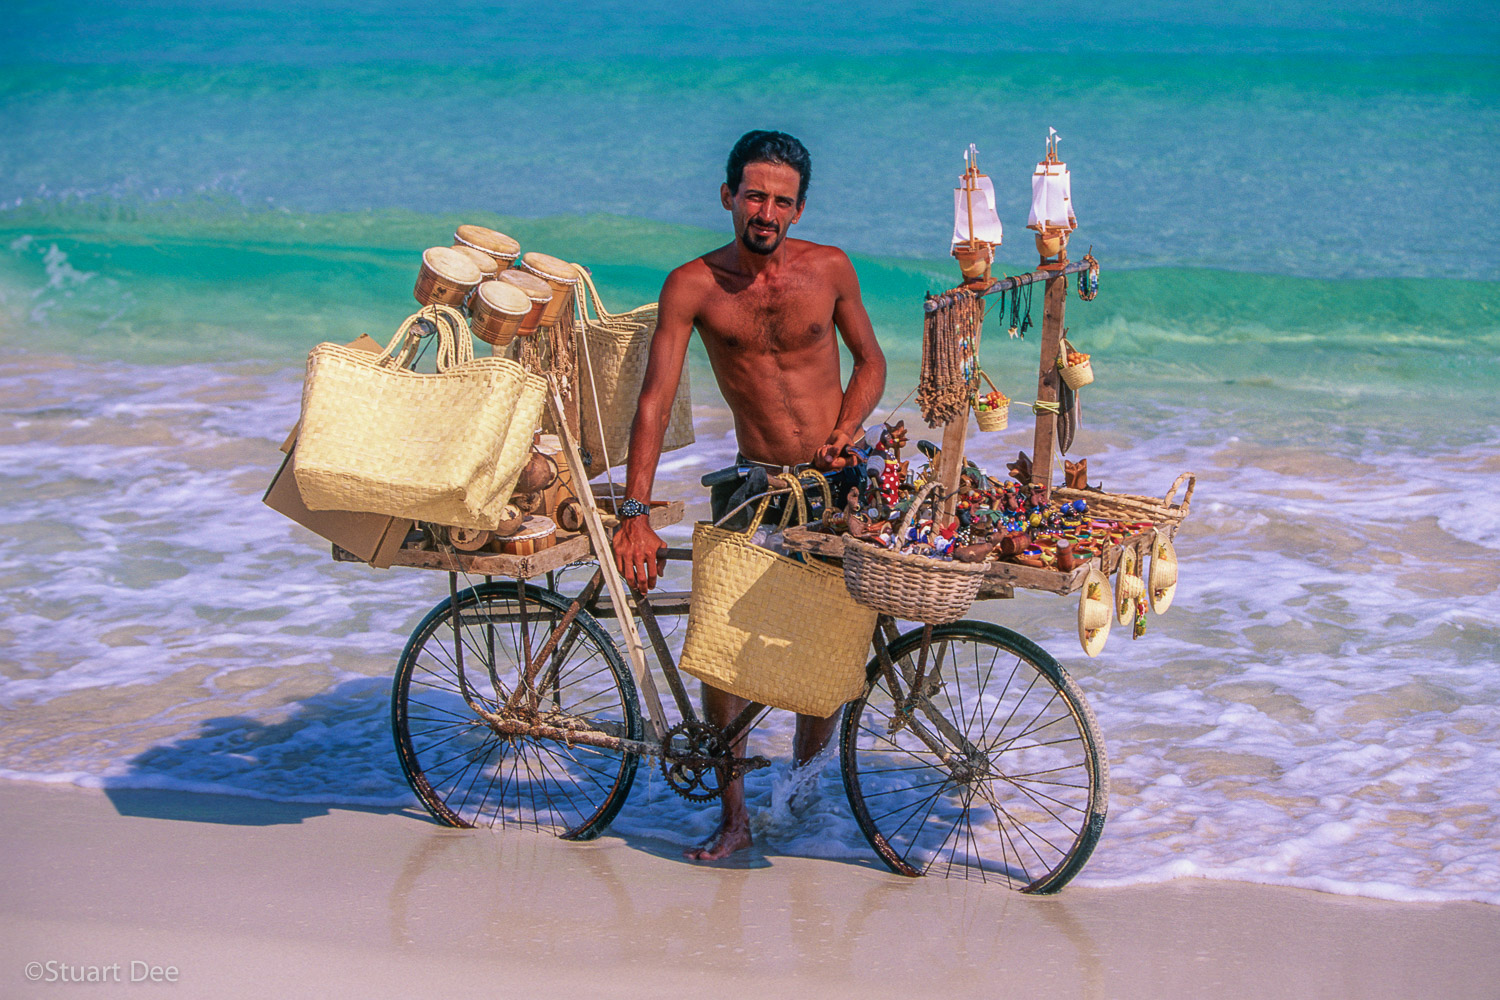  Beach vendor selling souvenirs, with his bicycle, Varadero, Cuba  
R 